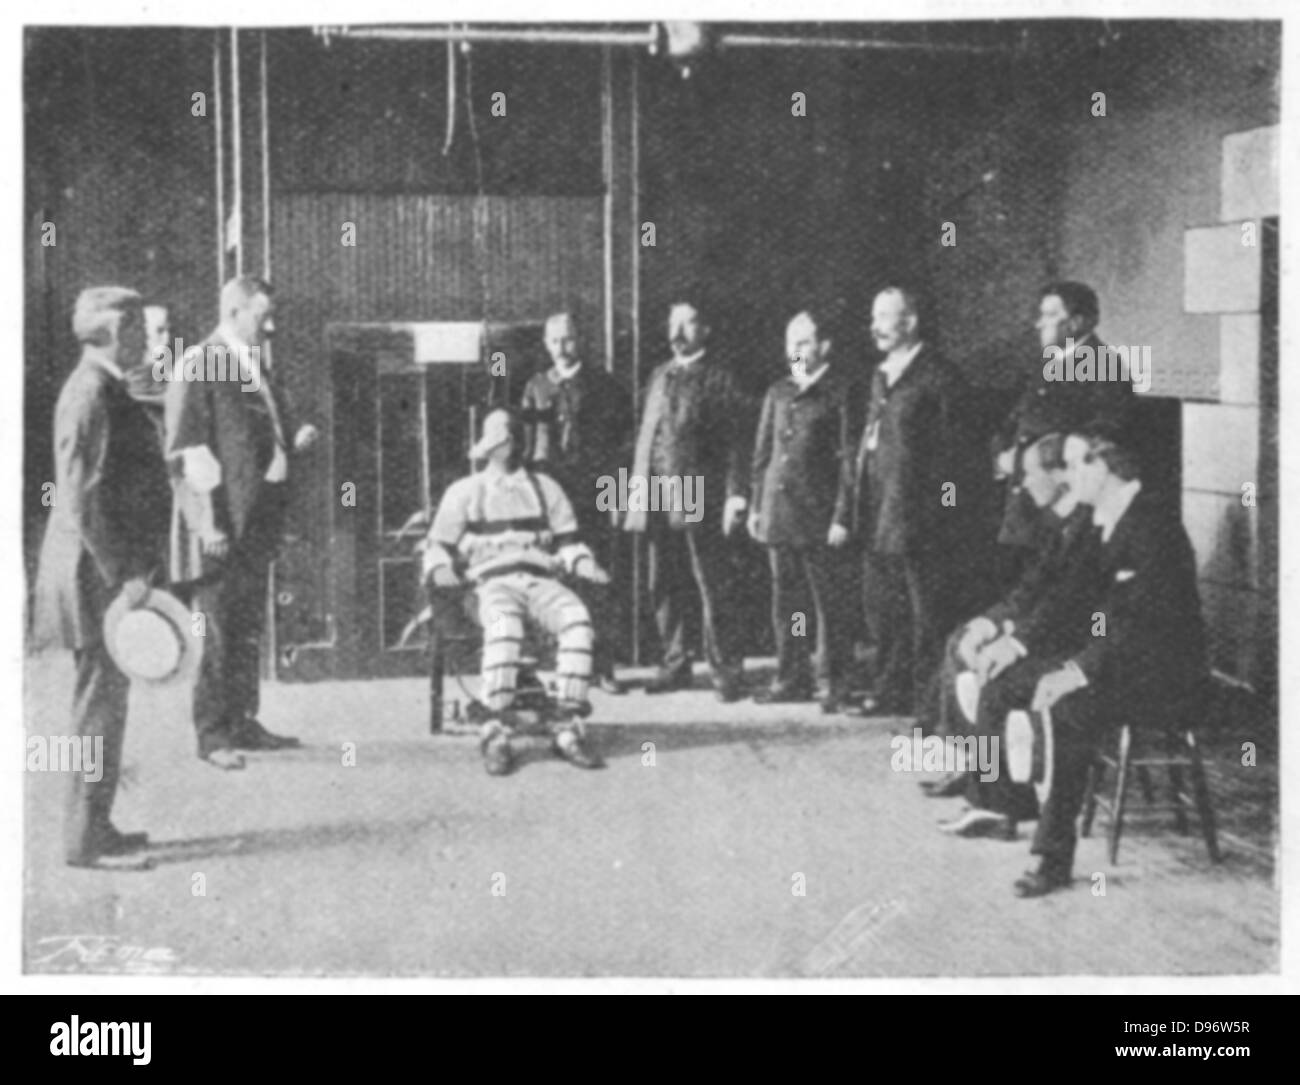 The 1914 Yankees Uniforms Were Sentenced to Sing Sing Prison